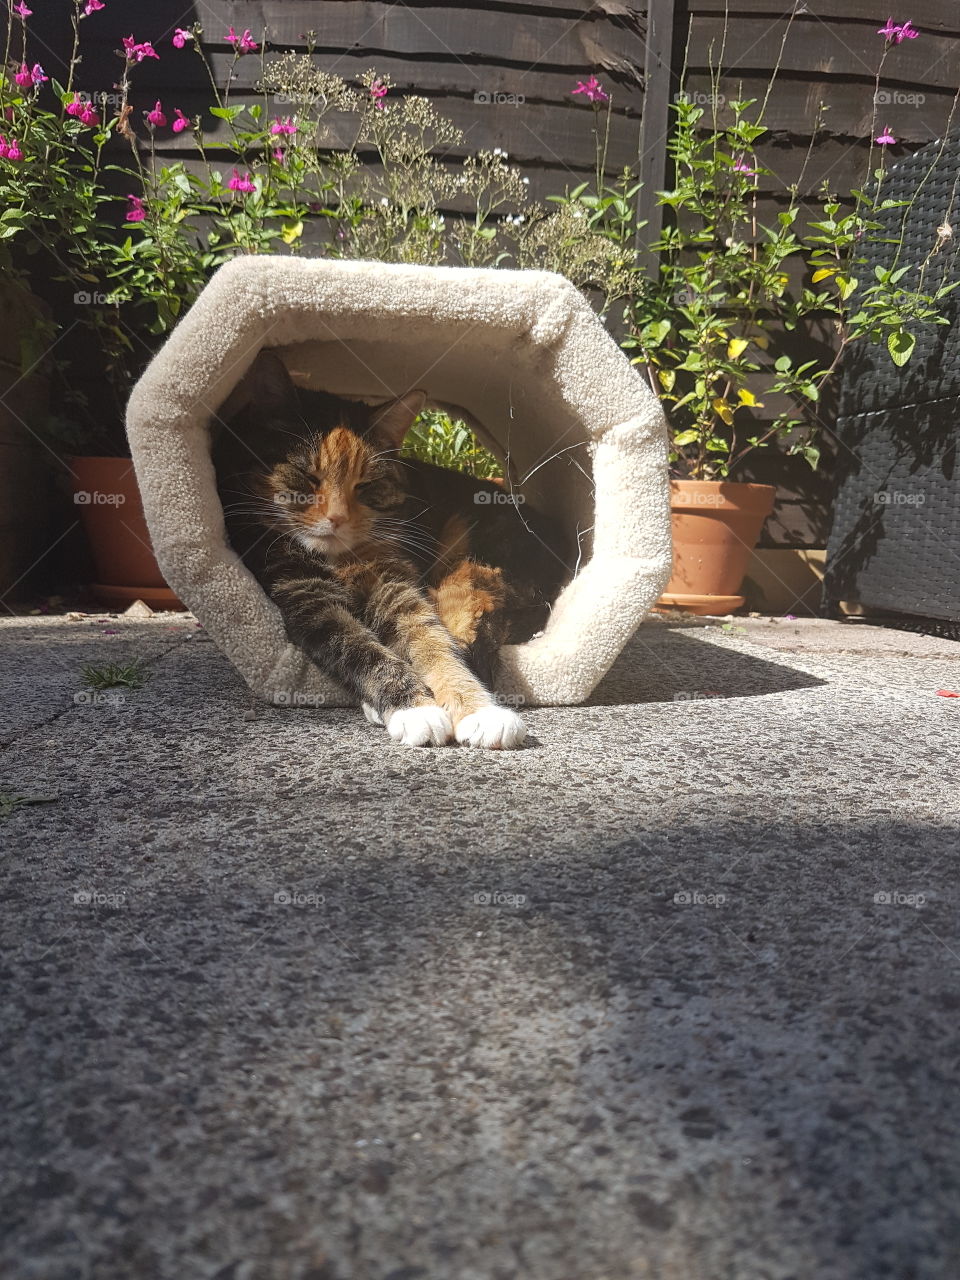 cat enjoying the sun in the garden